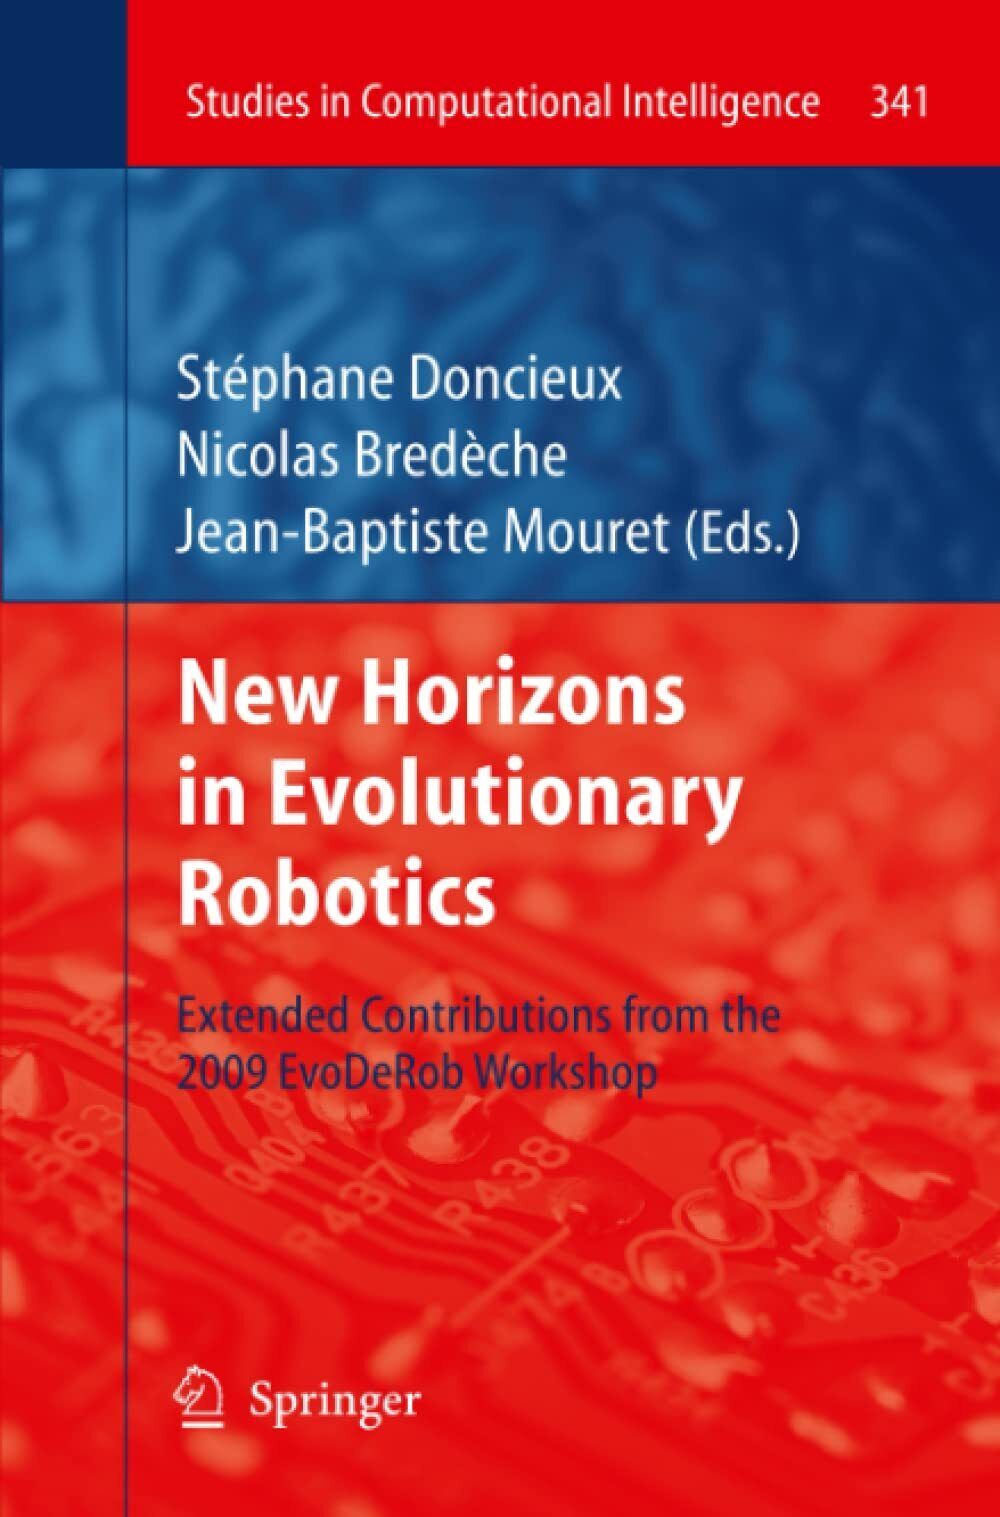 New Horizons in Evolutionary Robotics - St?phane Doncieux - Springer, 2013 libro usato